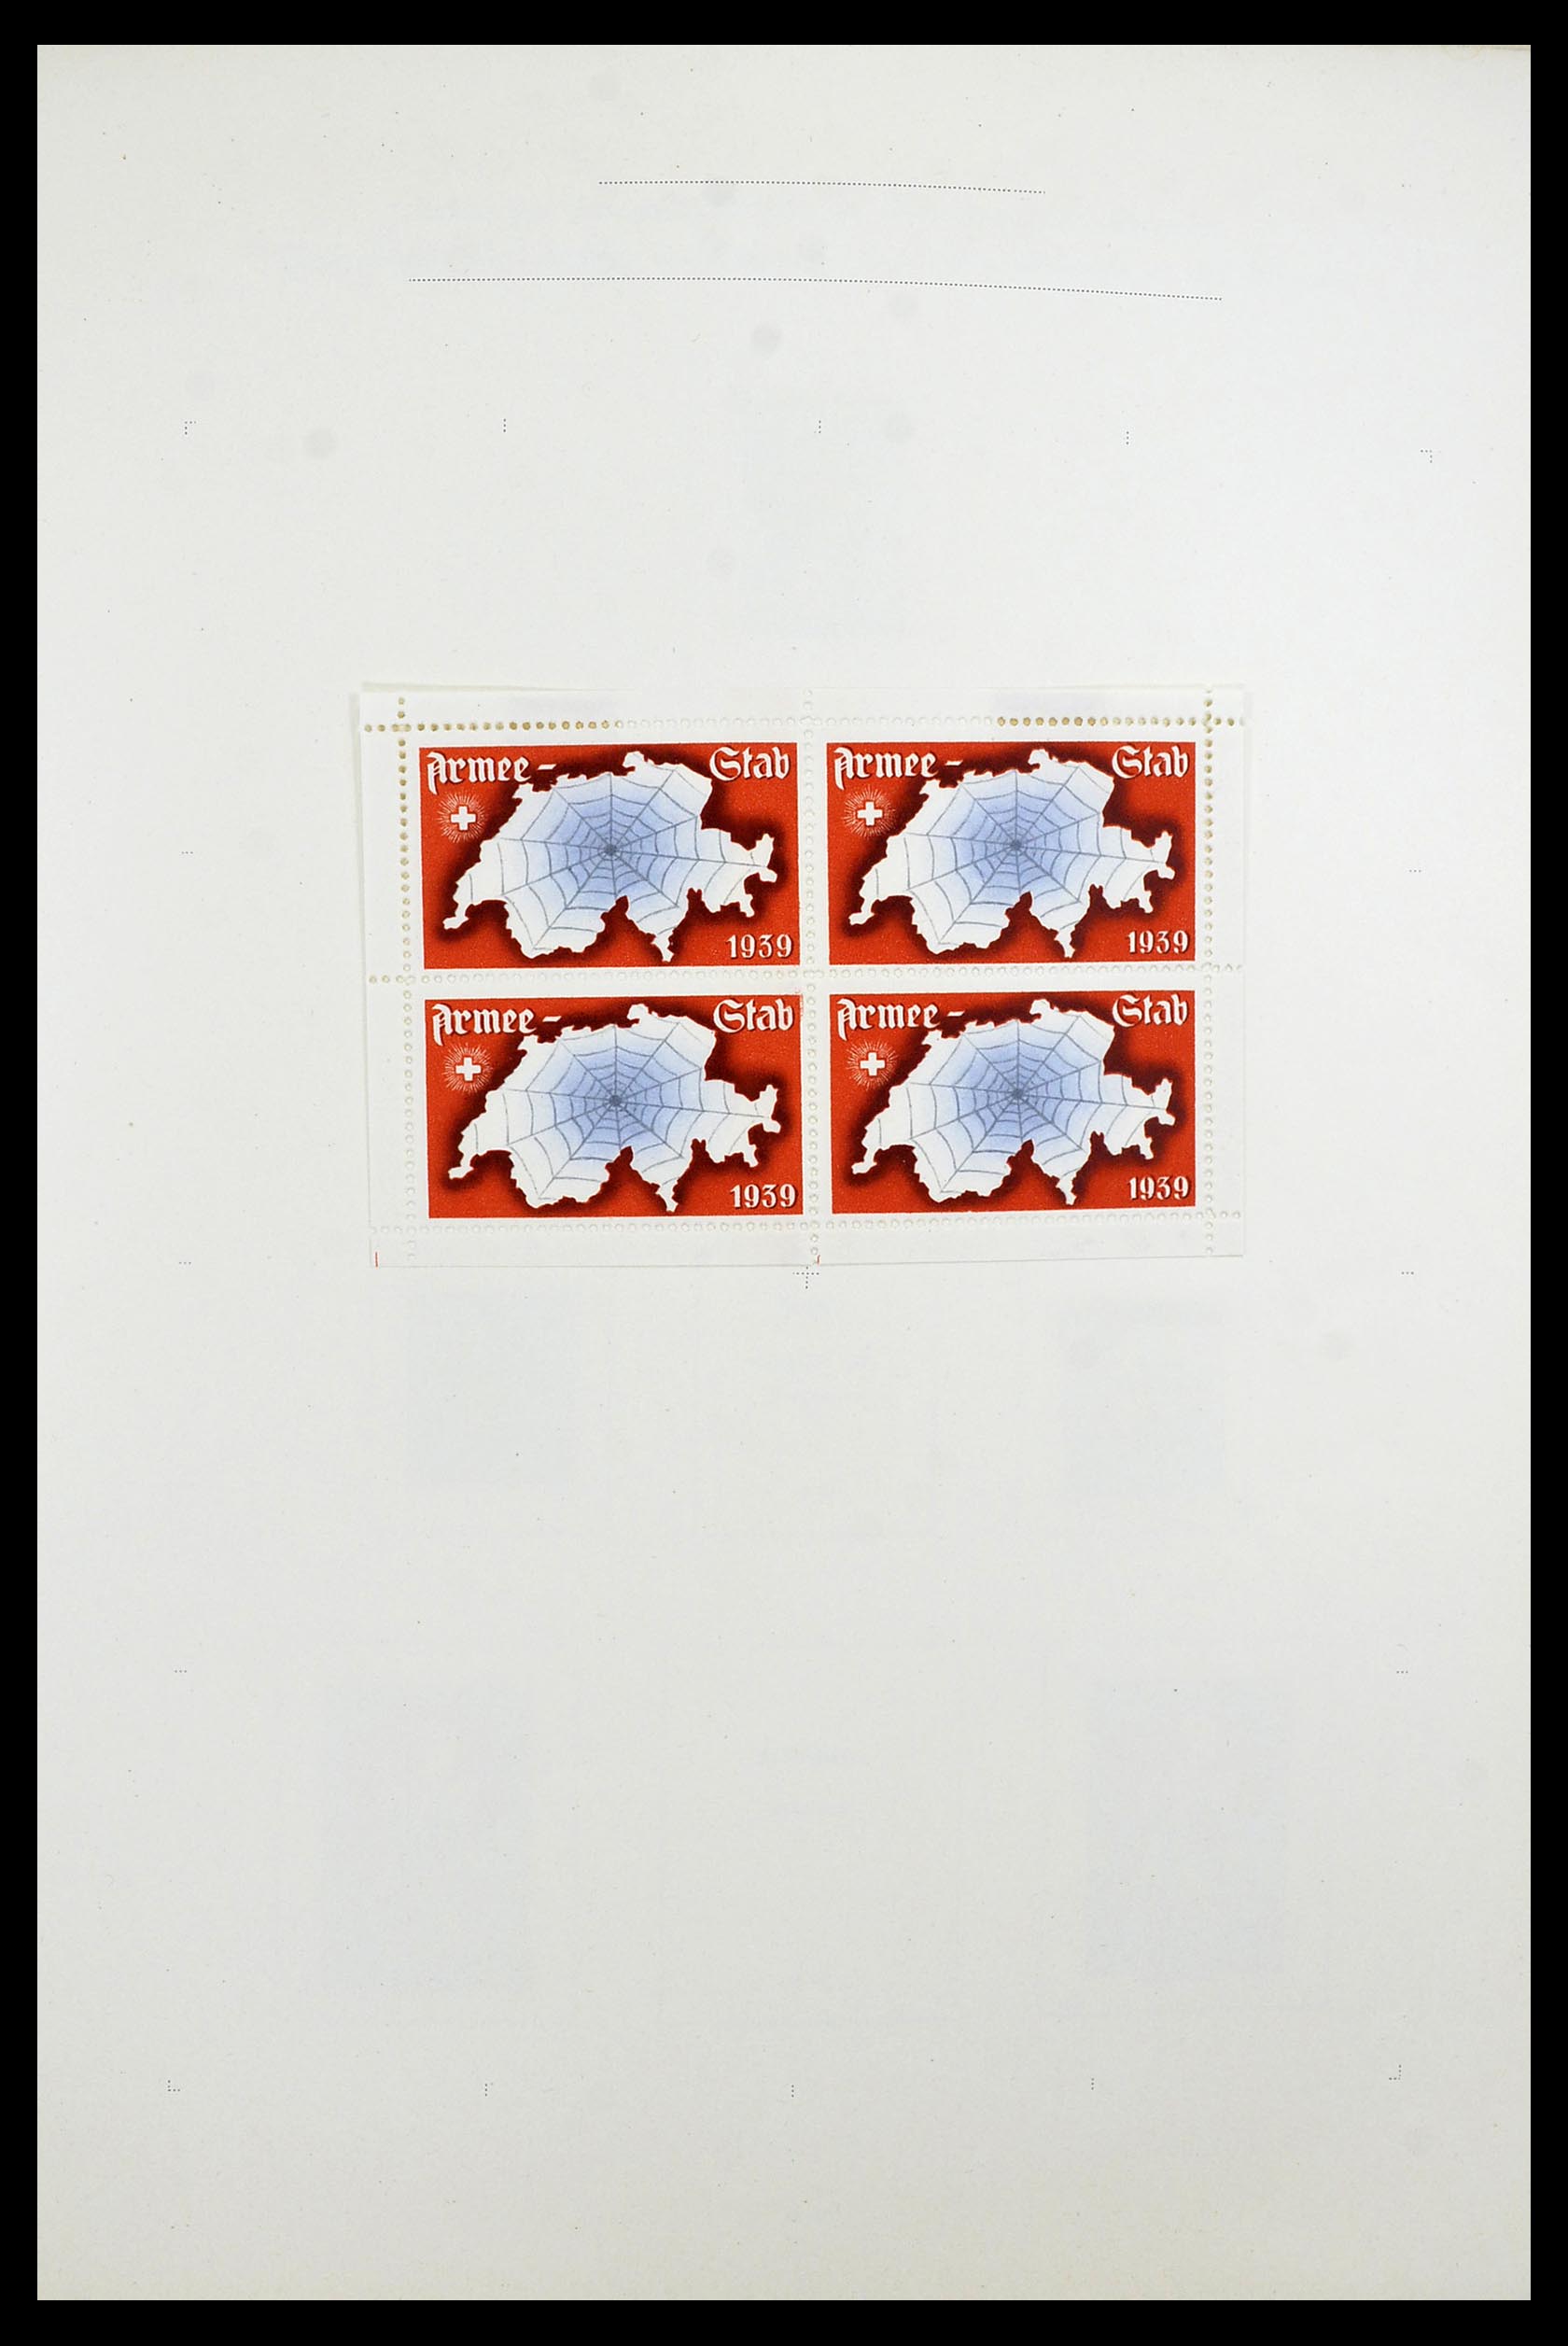 34234 002 - Stamp collection 34234 Switzerland soldier stamps 1939-1945.